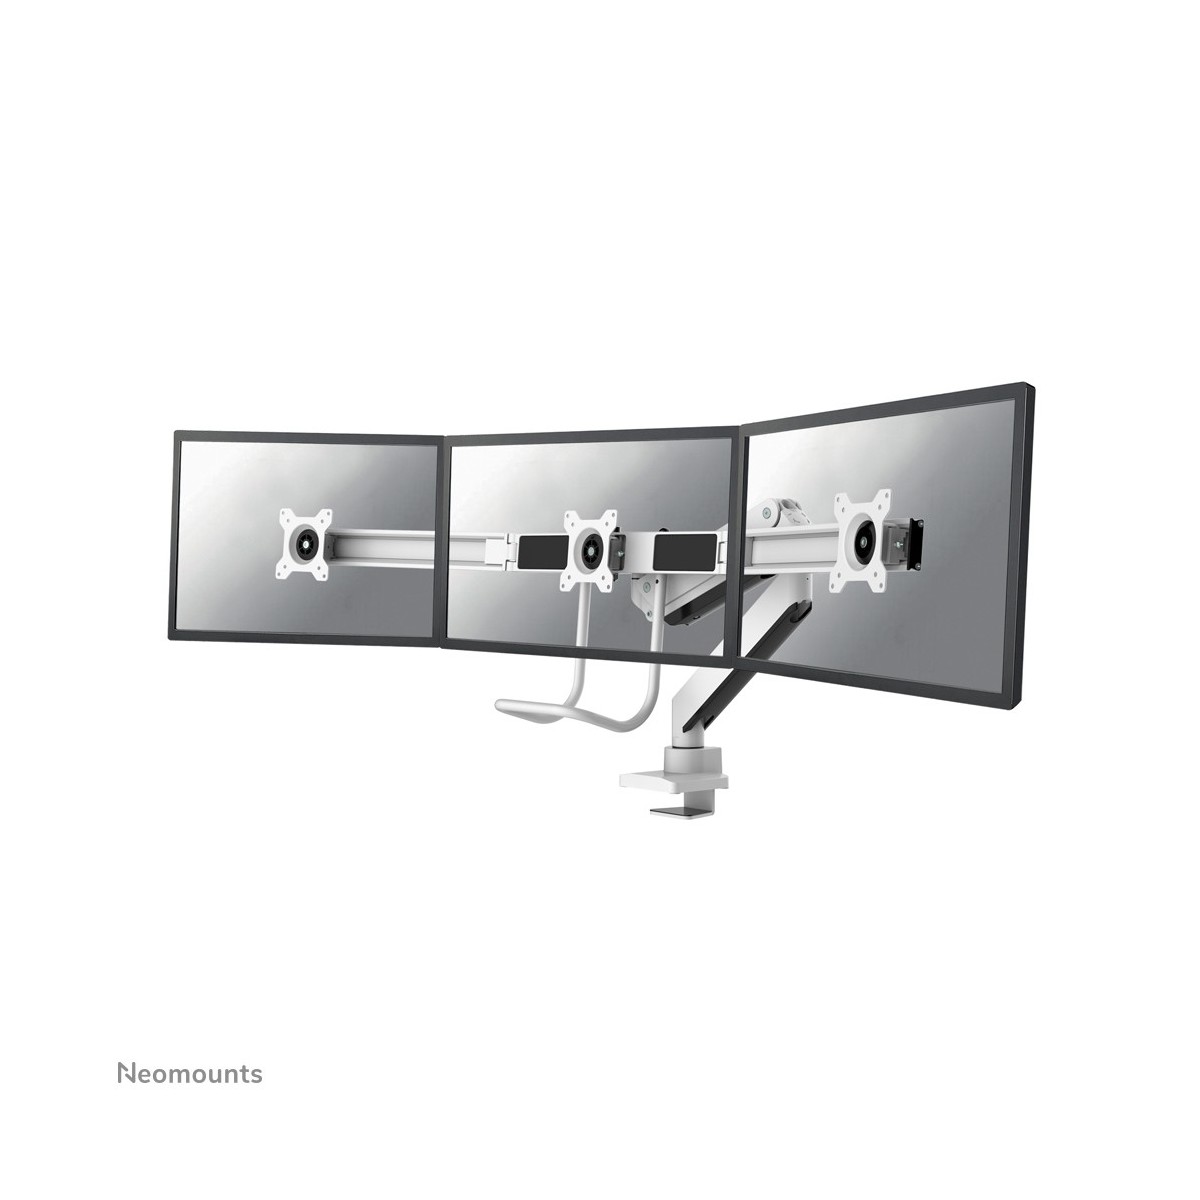 Neomounts flat screen desk mount - Clamp-Bolt-through - 6 kg - 43.2 cm (17") - 61 cm (24") - 100 x 100 mm - White